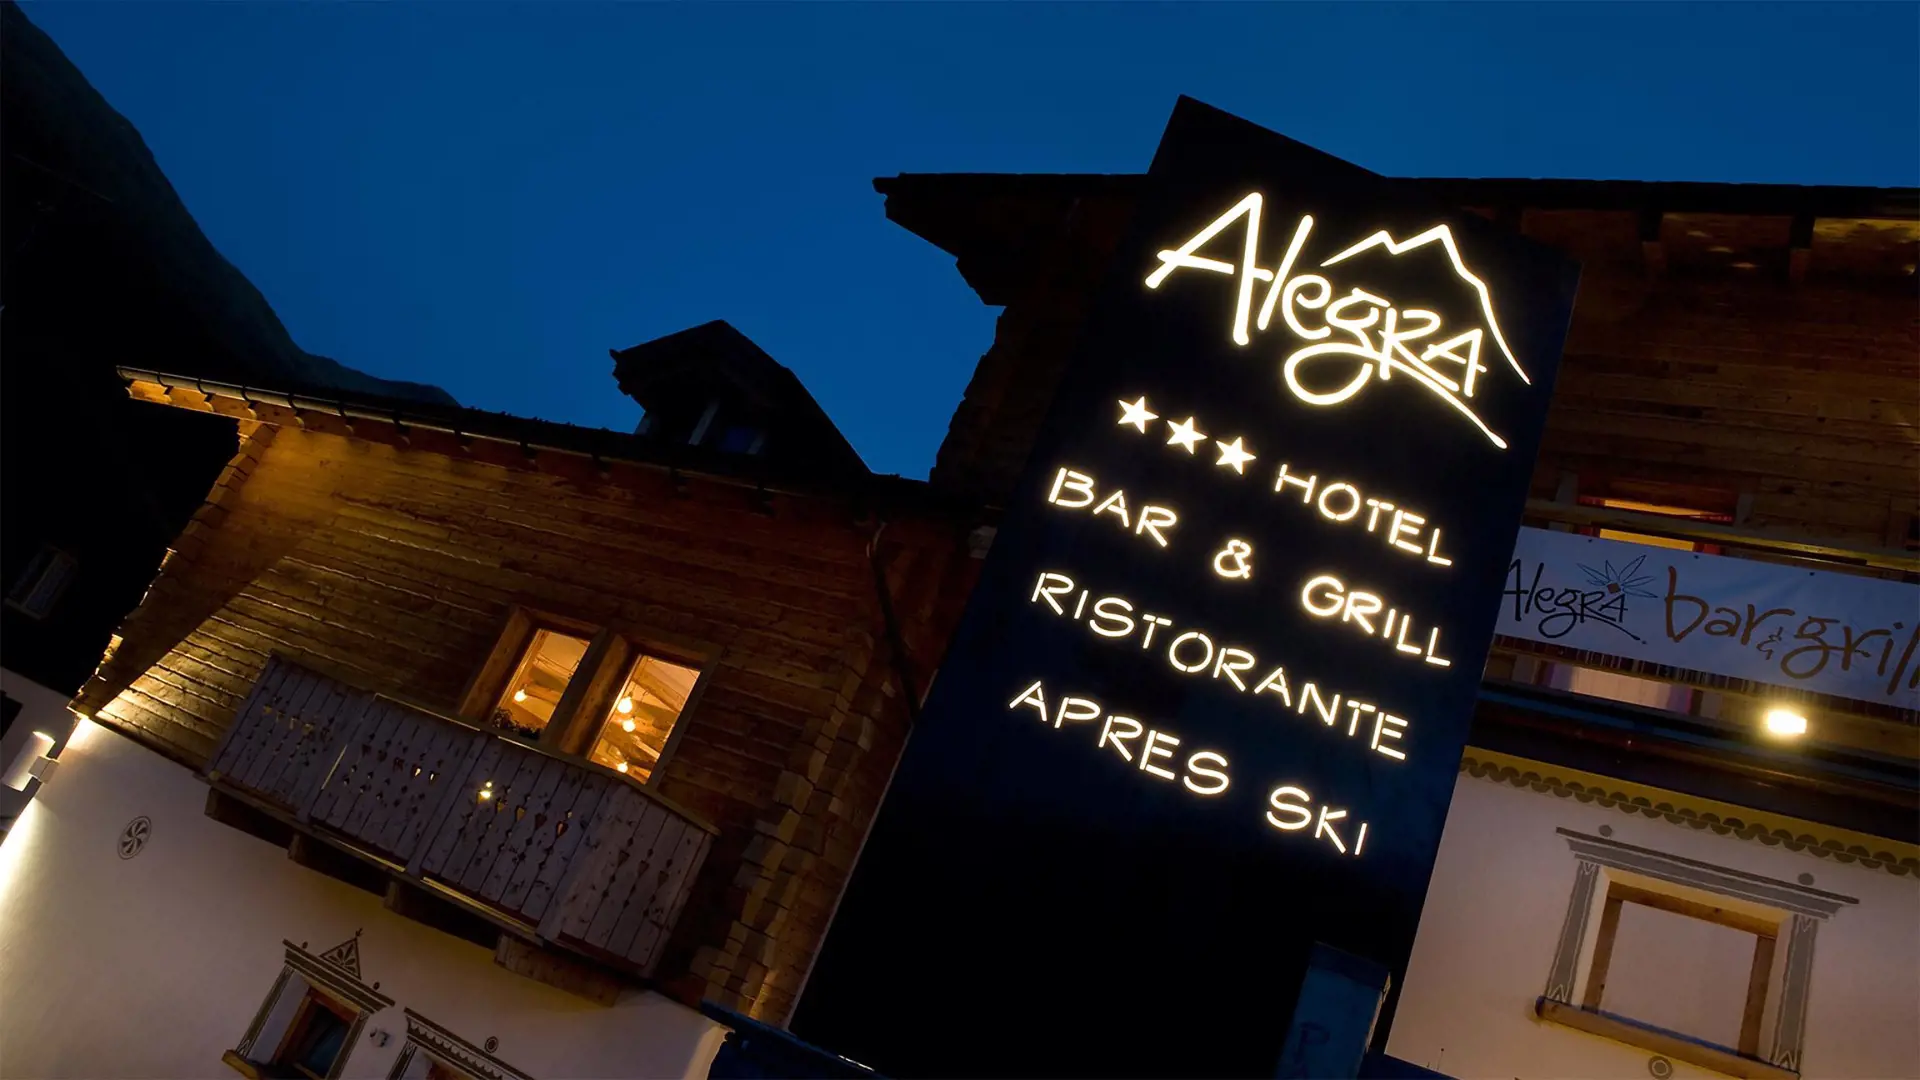 Hotel Alegra